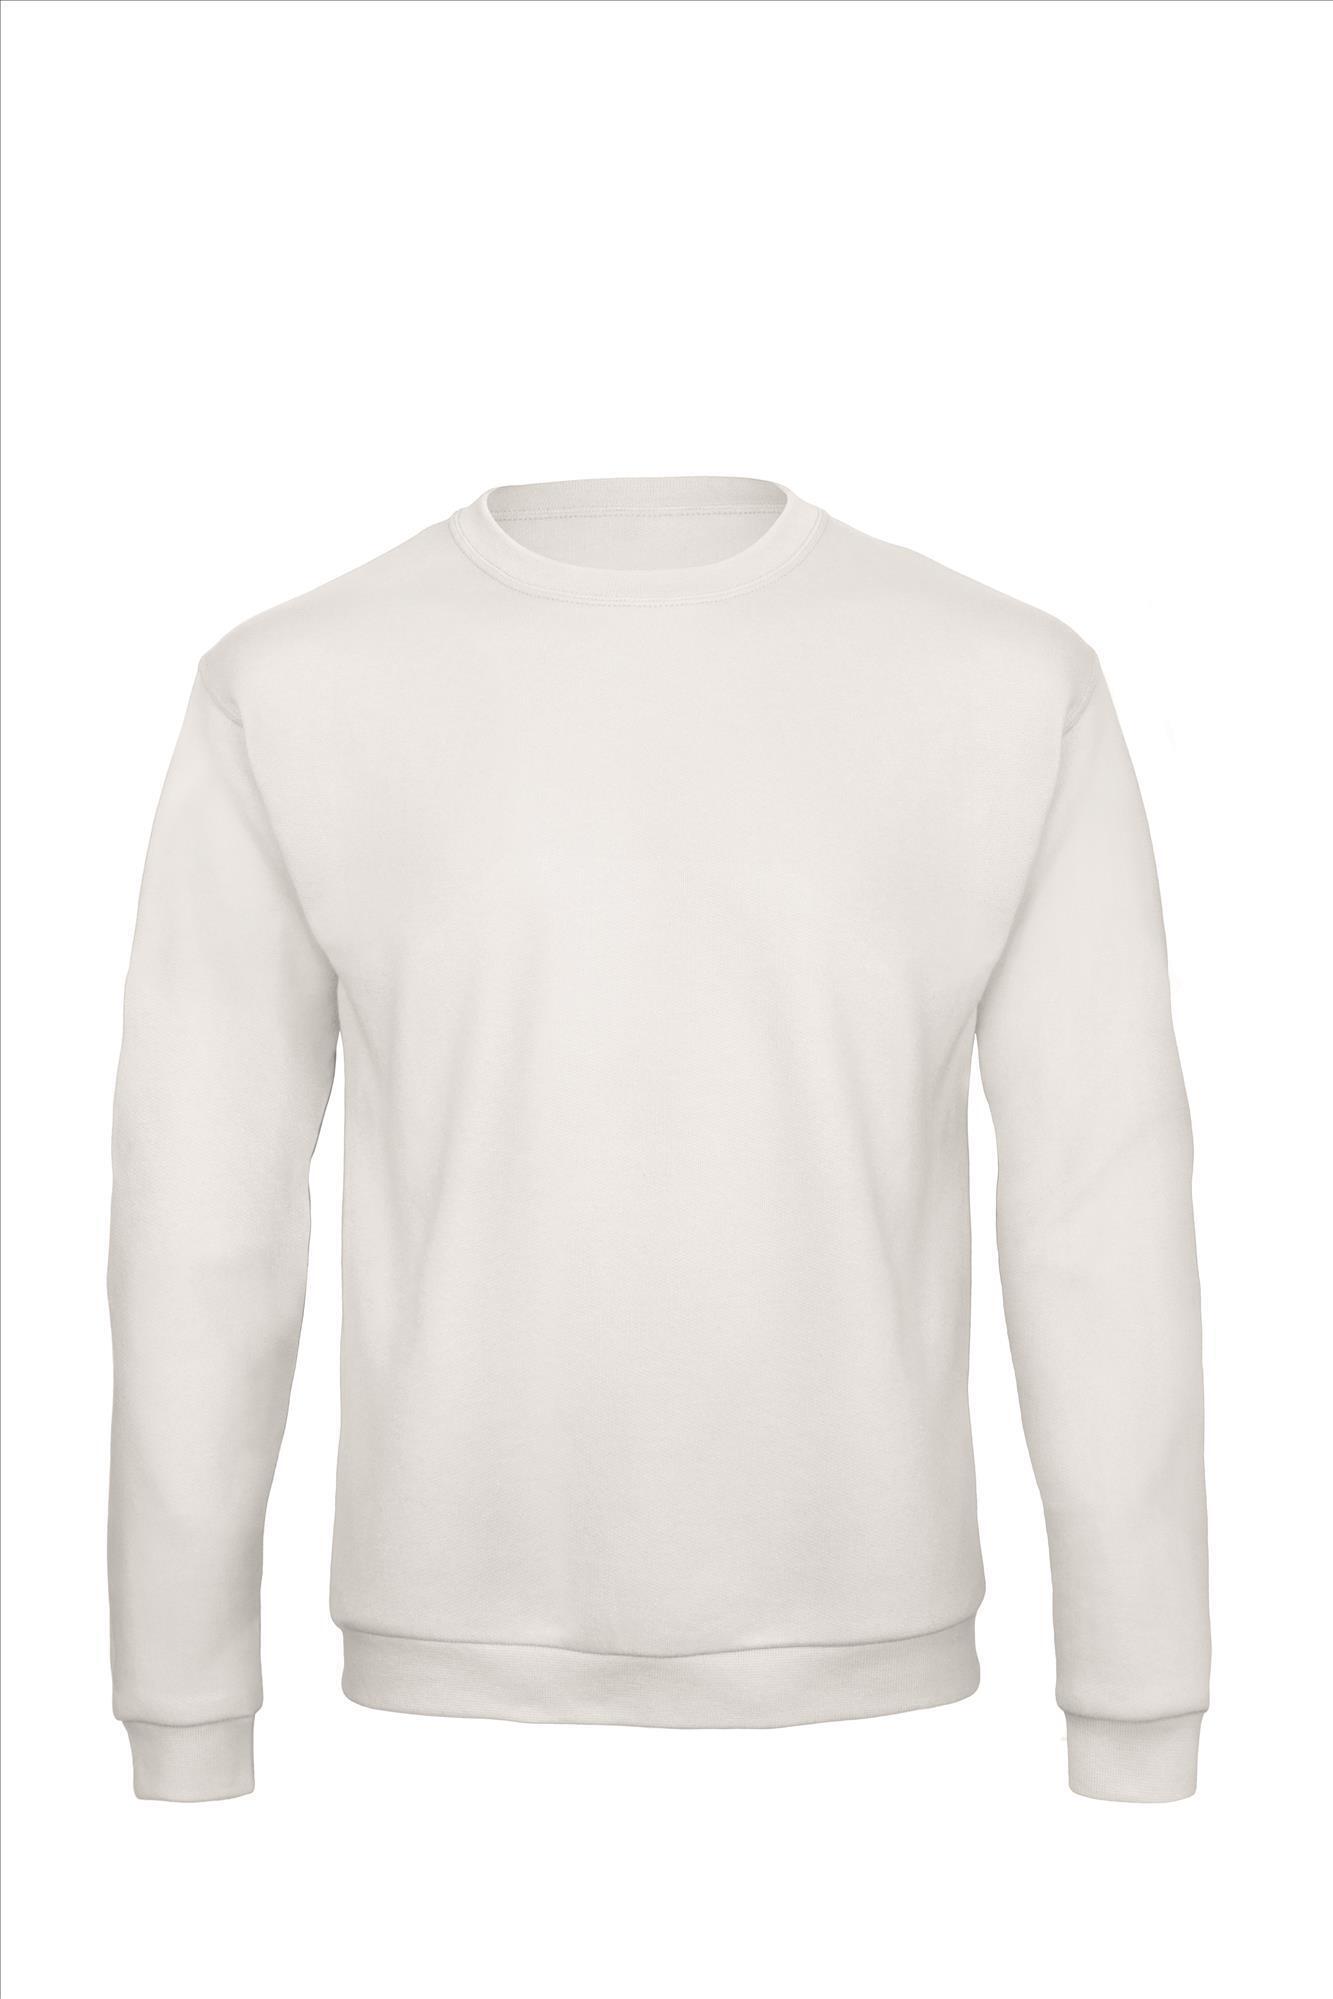 Wit sweater voor mannen budget 